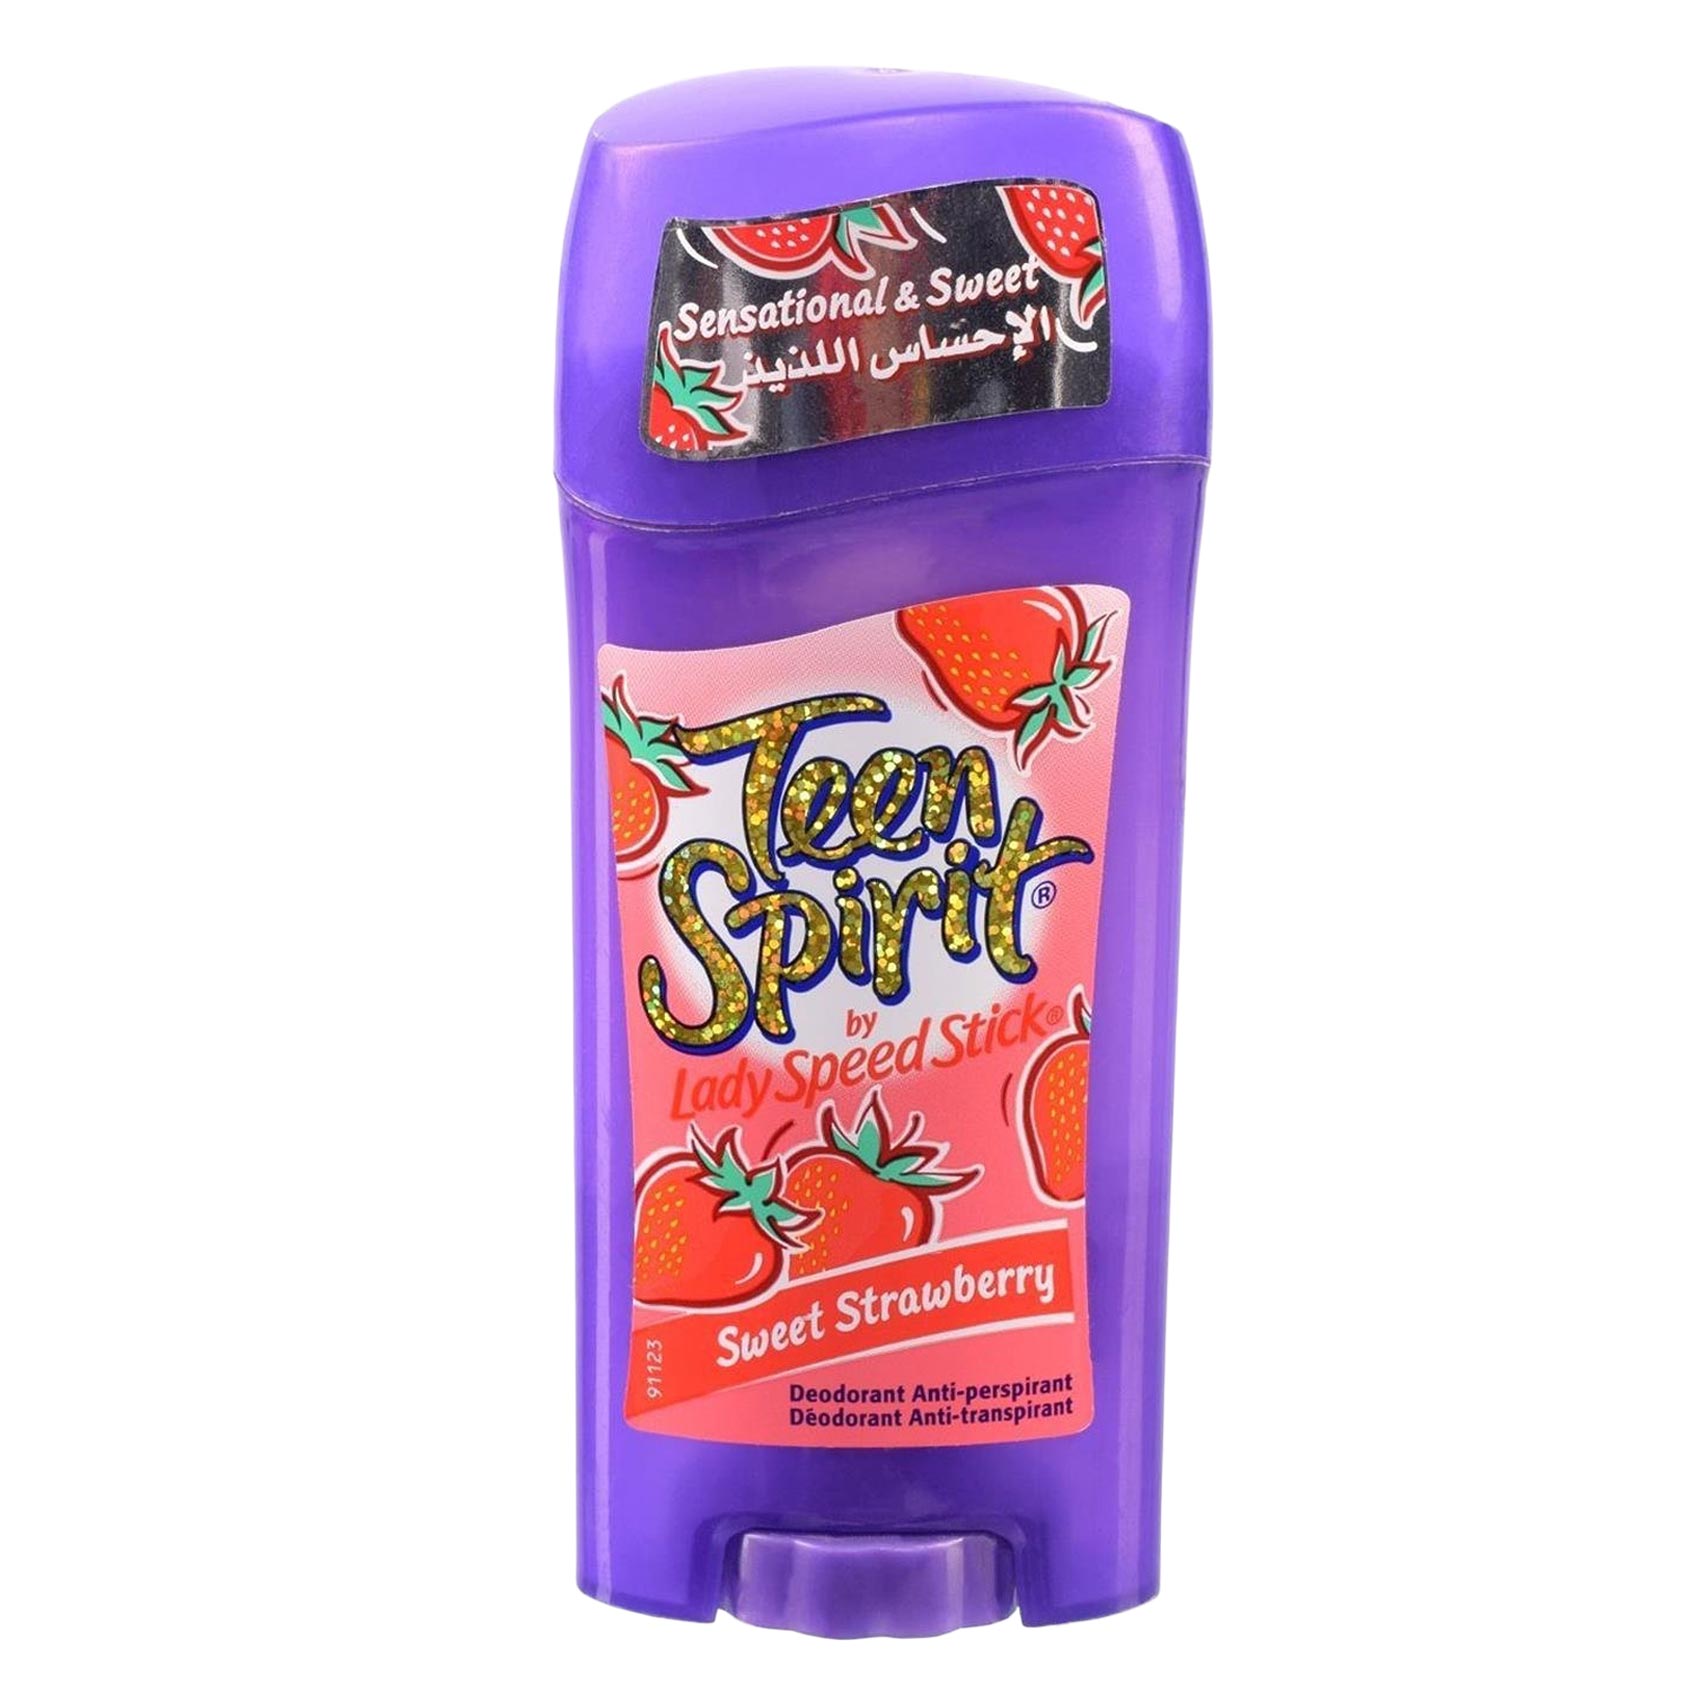 Lady Speed Stick Teen Spirit Deodorant Stick Sweet Strawberry 65g -20% Off